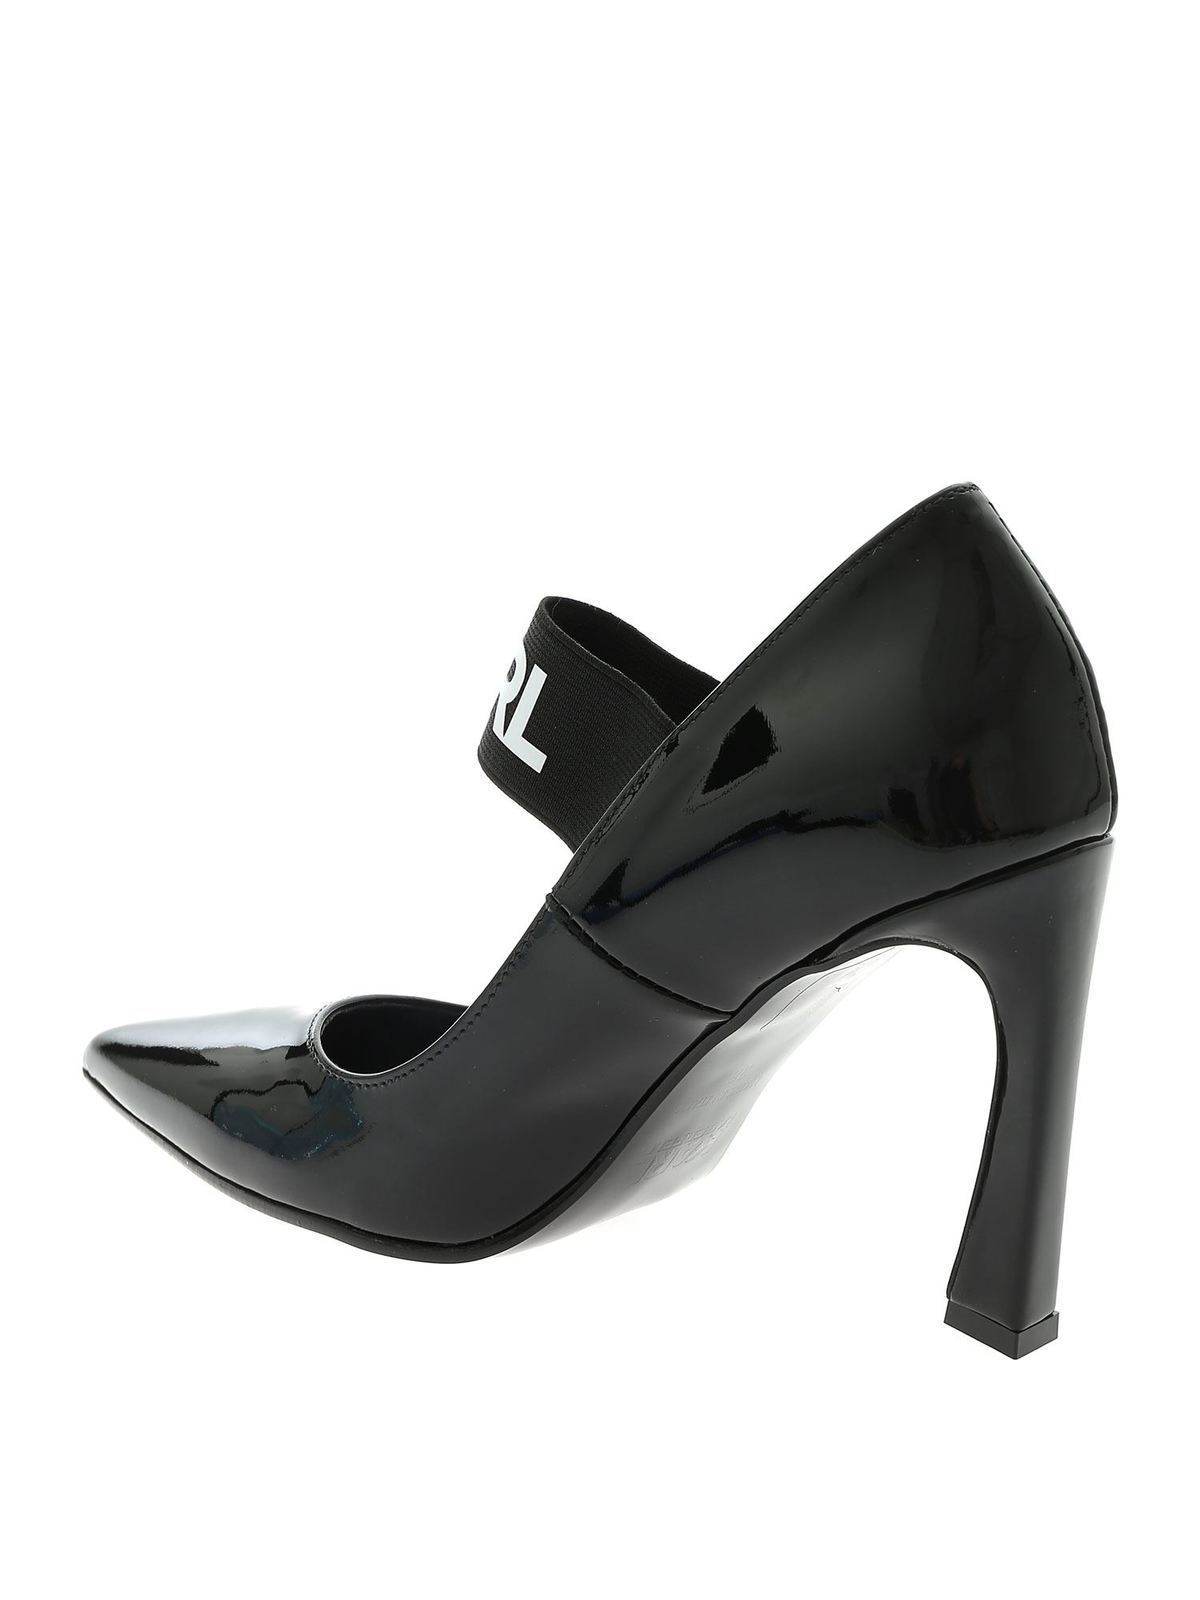 Court shoes Karl - Veneto pumps - iKRIX.com